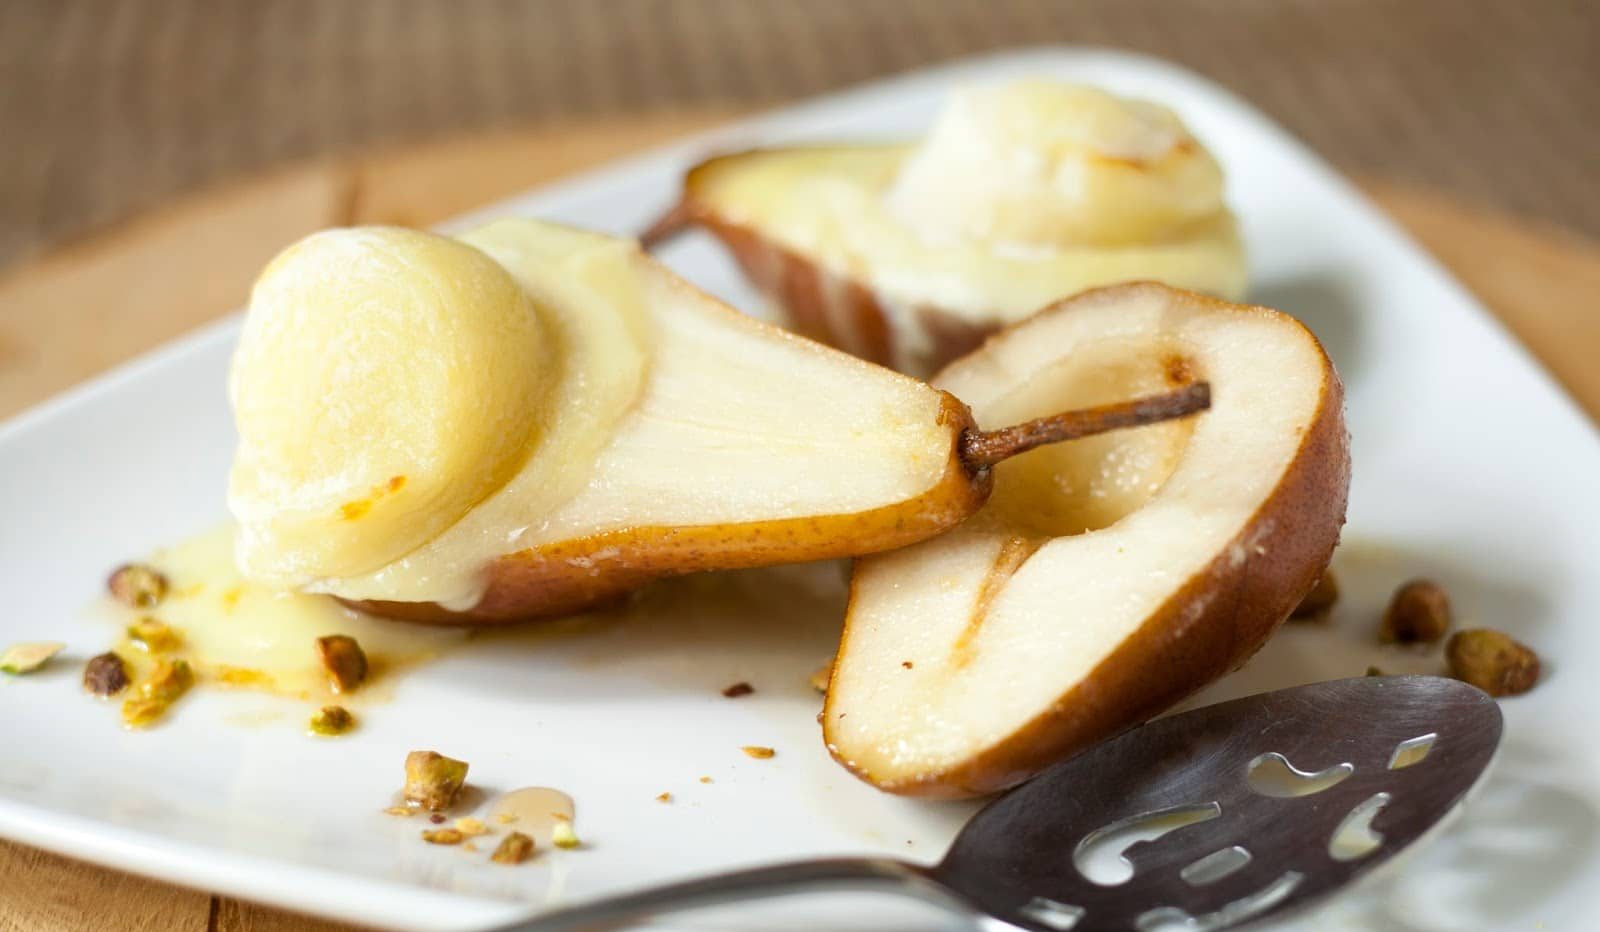  Buy Kieffer Pears | Selling All Types of Kieffer Pears At a Reasonable Price 